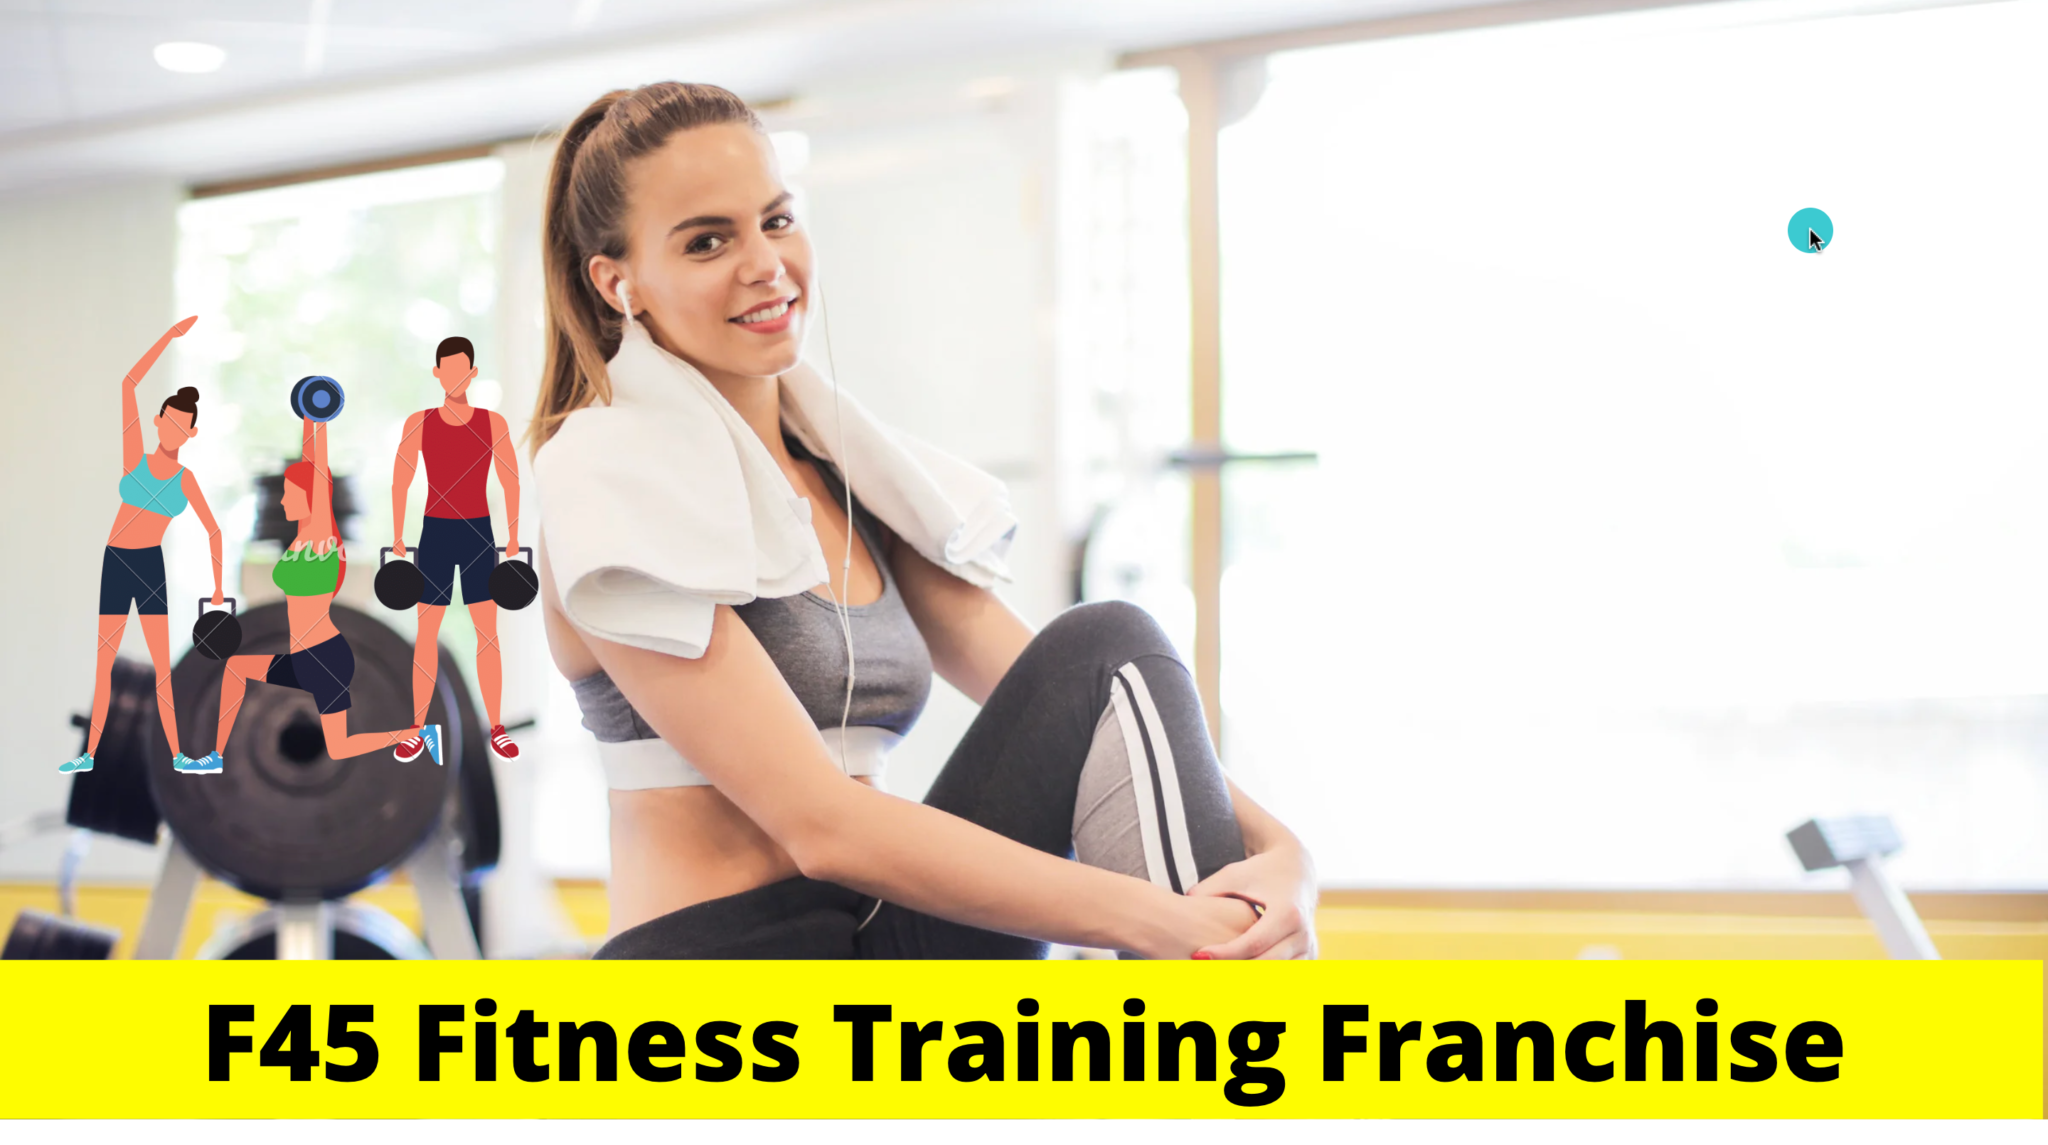 F45 fitness franchise, Cost, Profit, Training